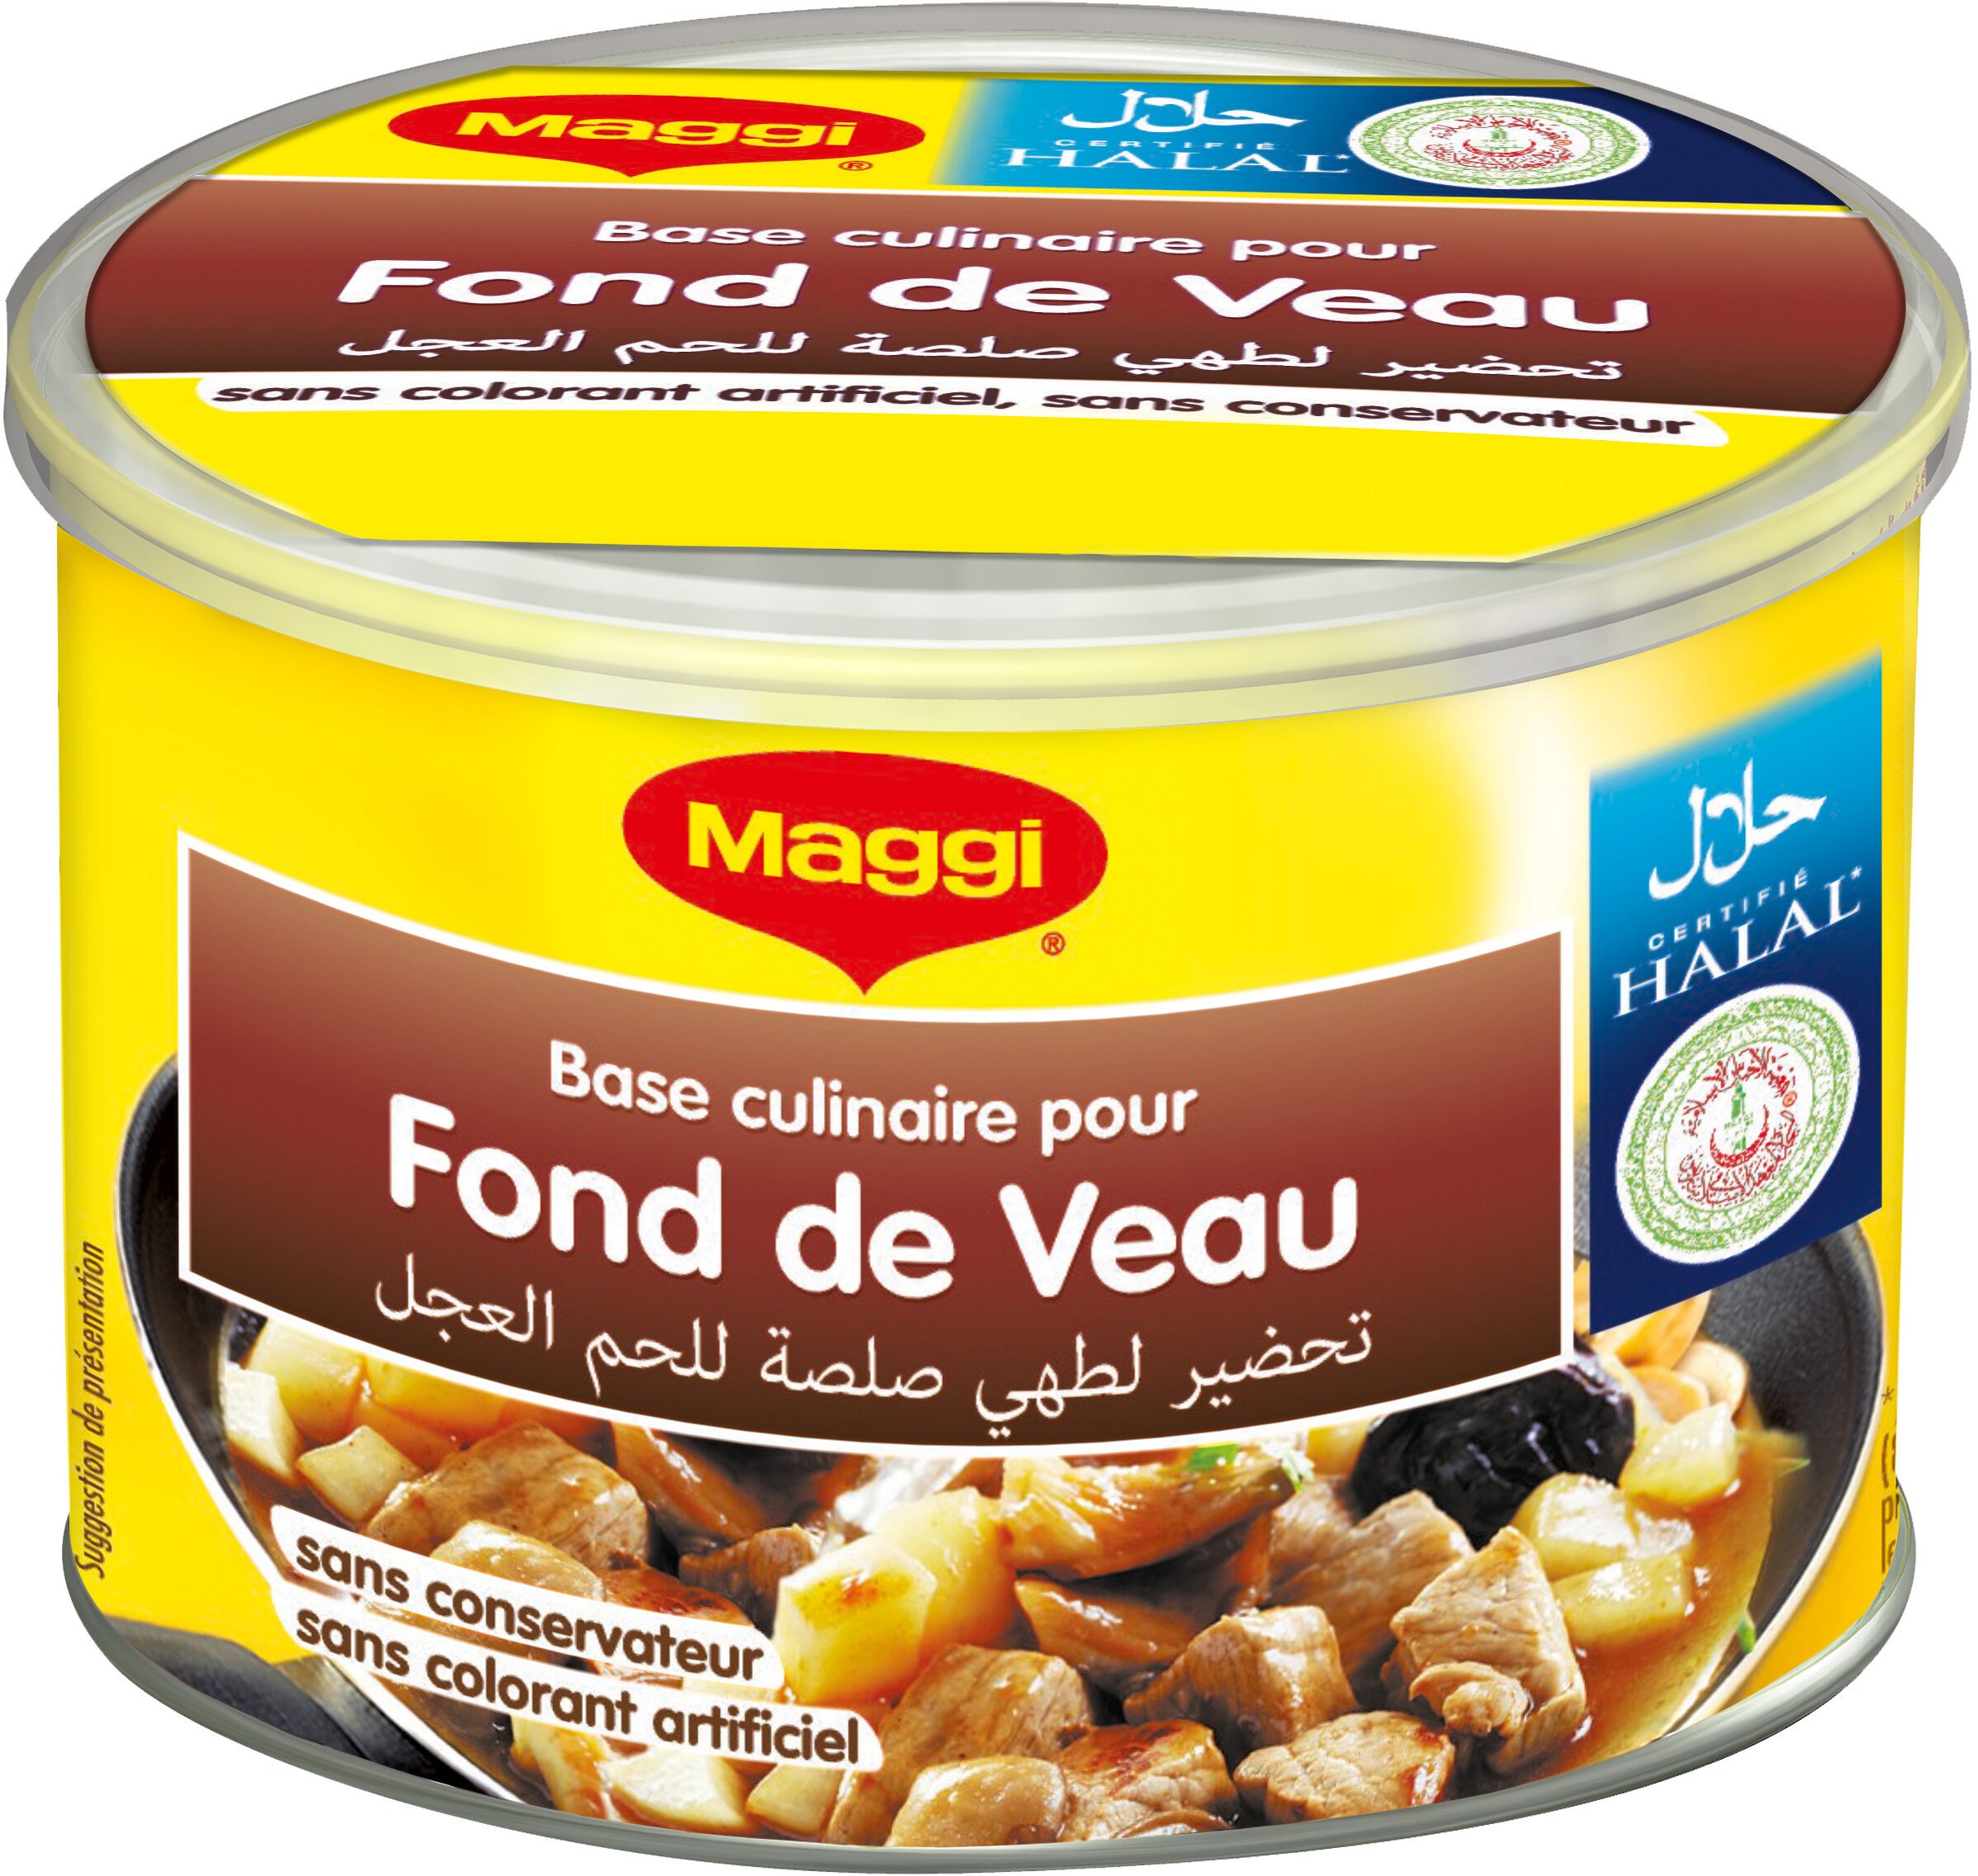 Maggi - Fond de veau halal, Delivery Near You